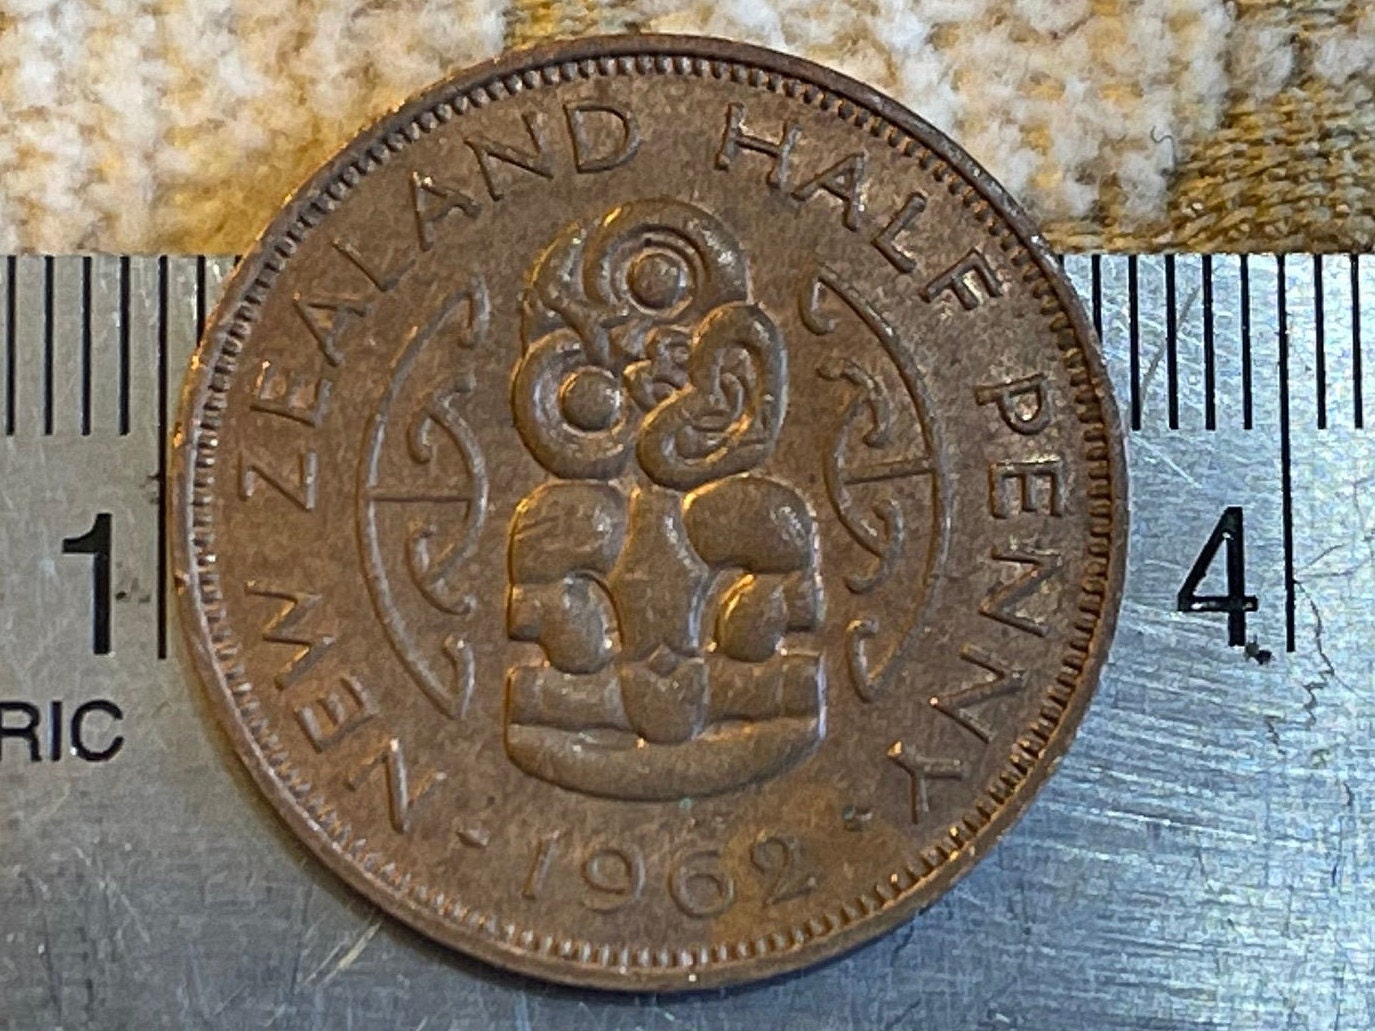 Maori Hei-tiki Goddess of Childbirth Half Penny New Zealand Authentic Coin Money for Jewelry (Ancestor Pendant) (Hineteiwaiwa) (Taonga)